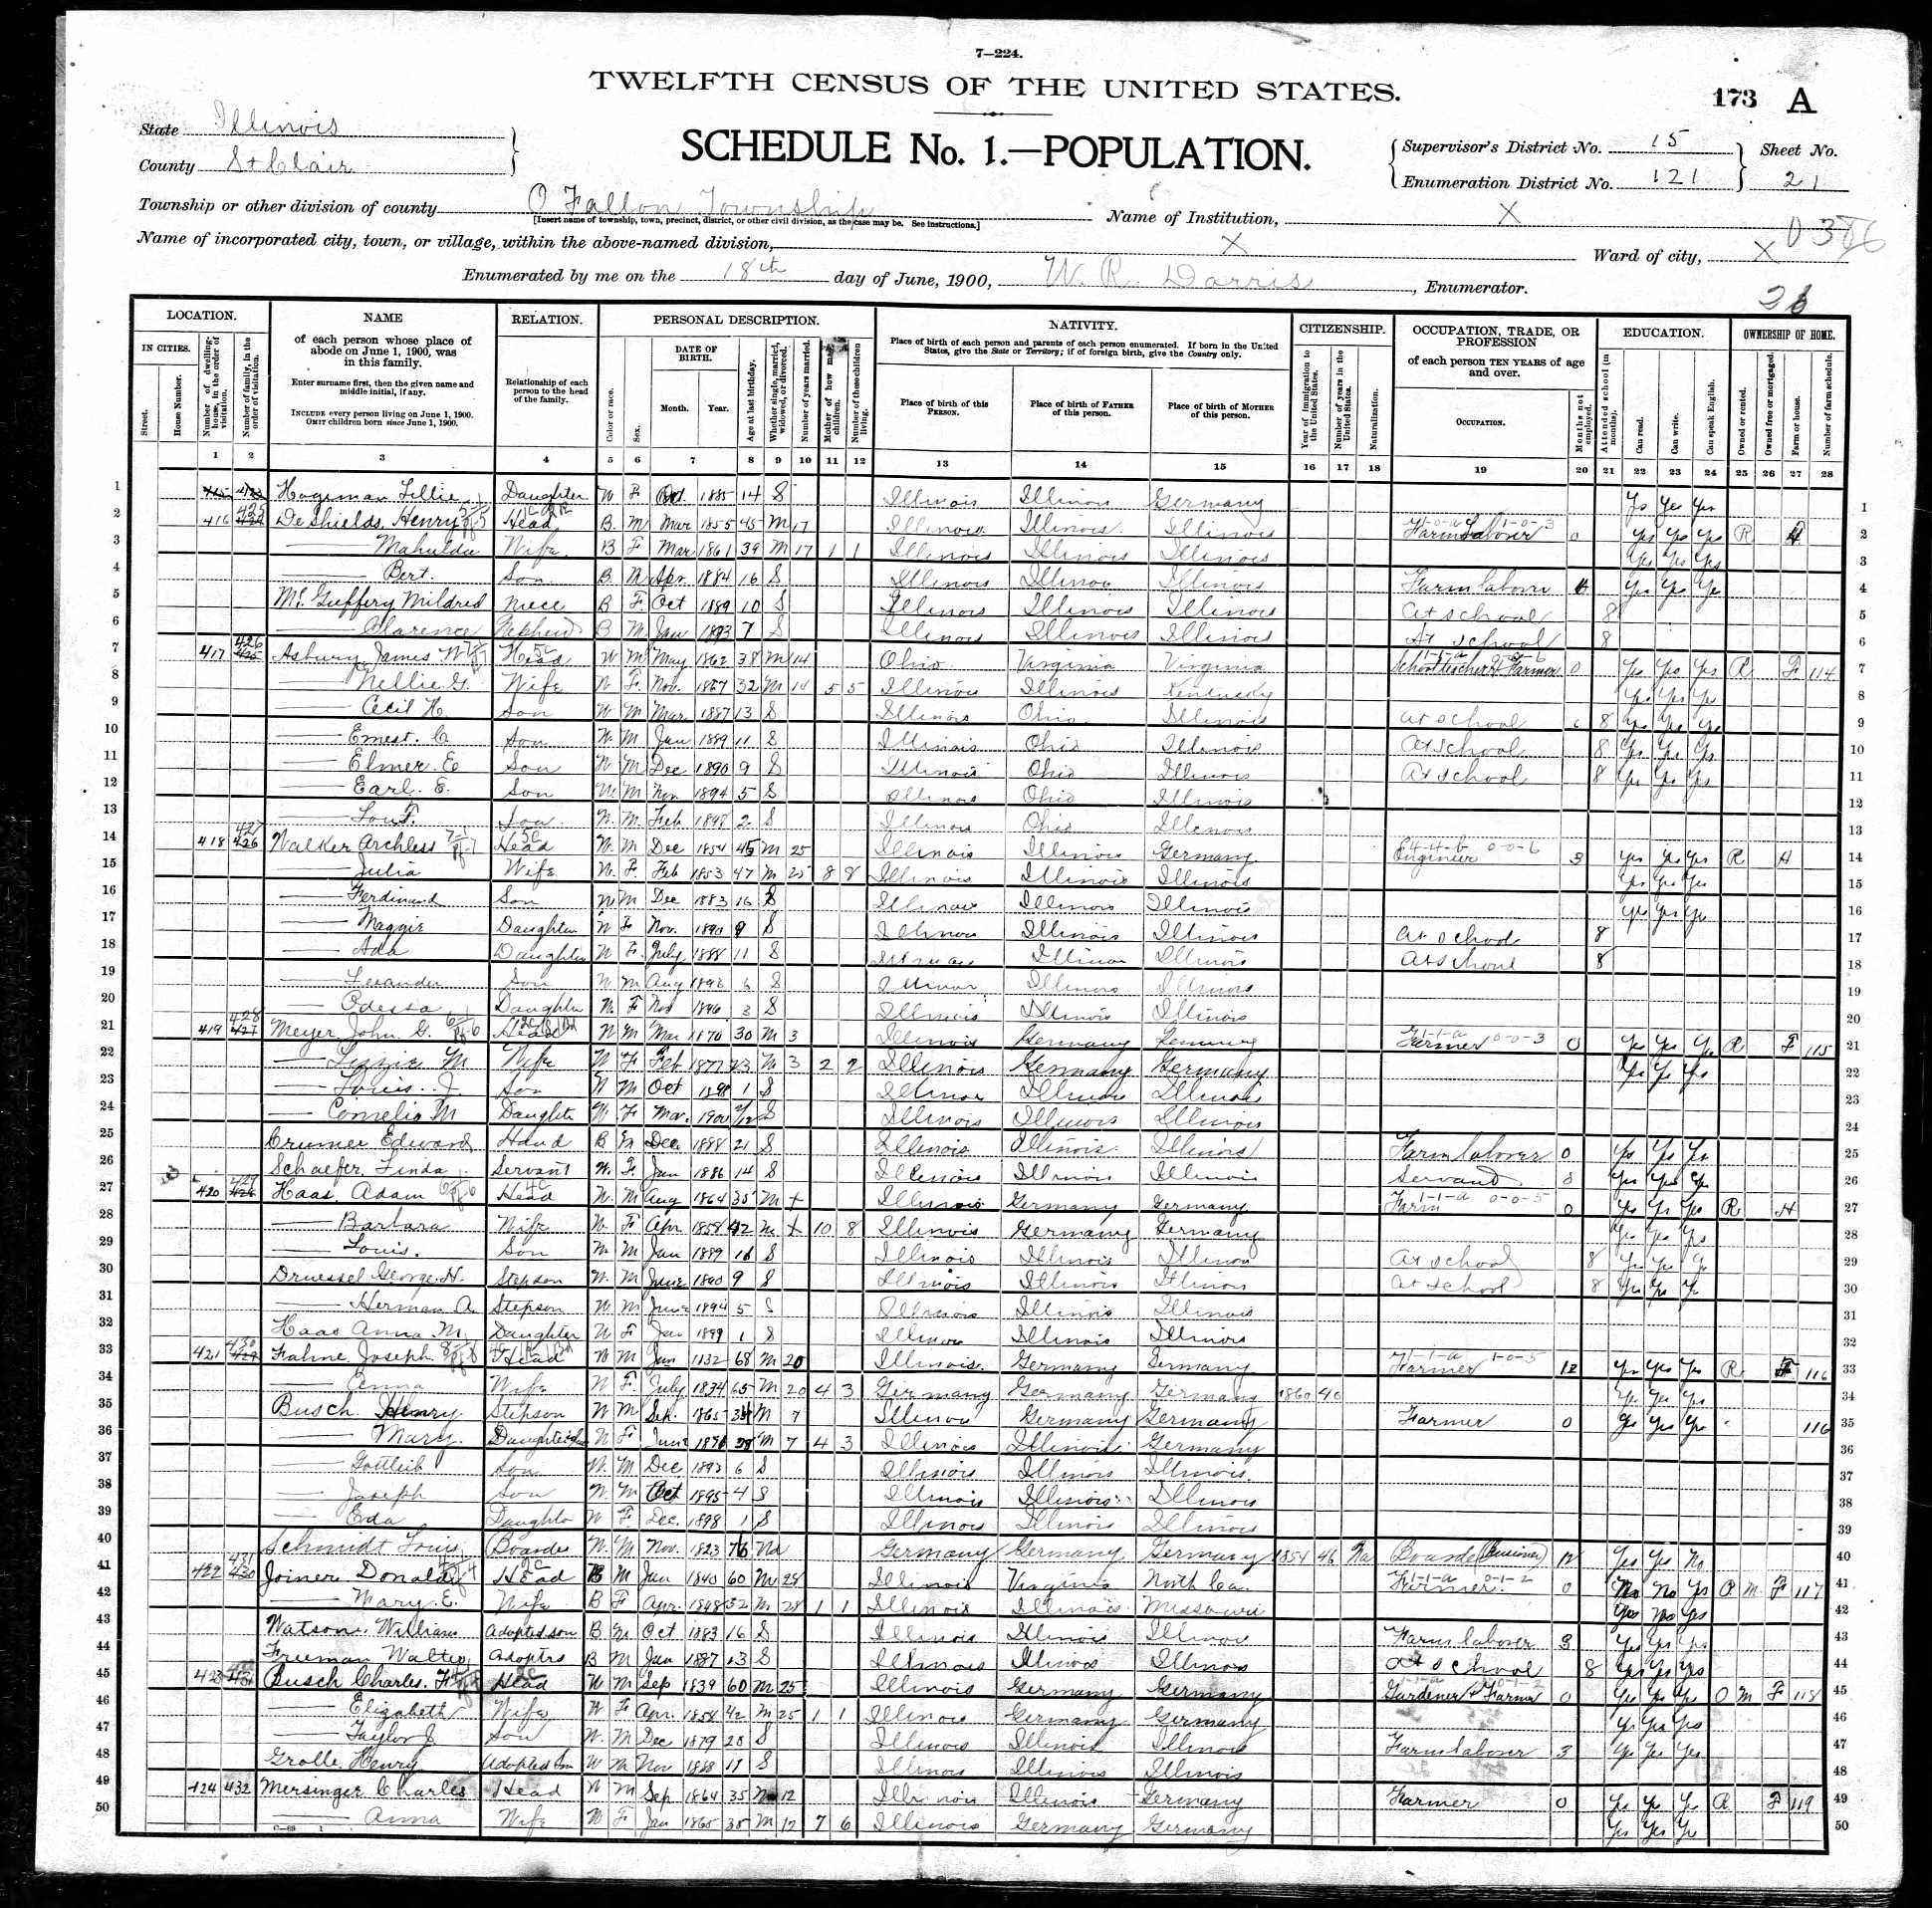 Achilles Walker, 1900 St. Clair County, Illinois, census